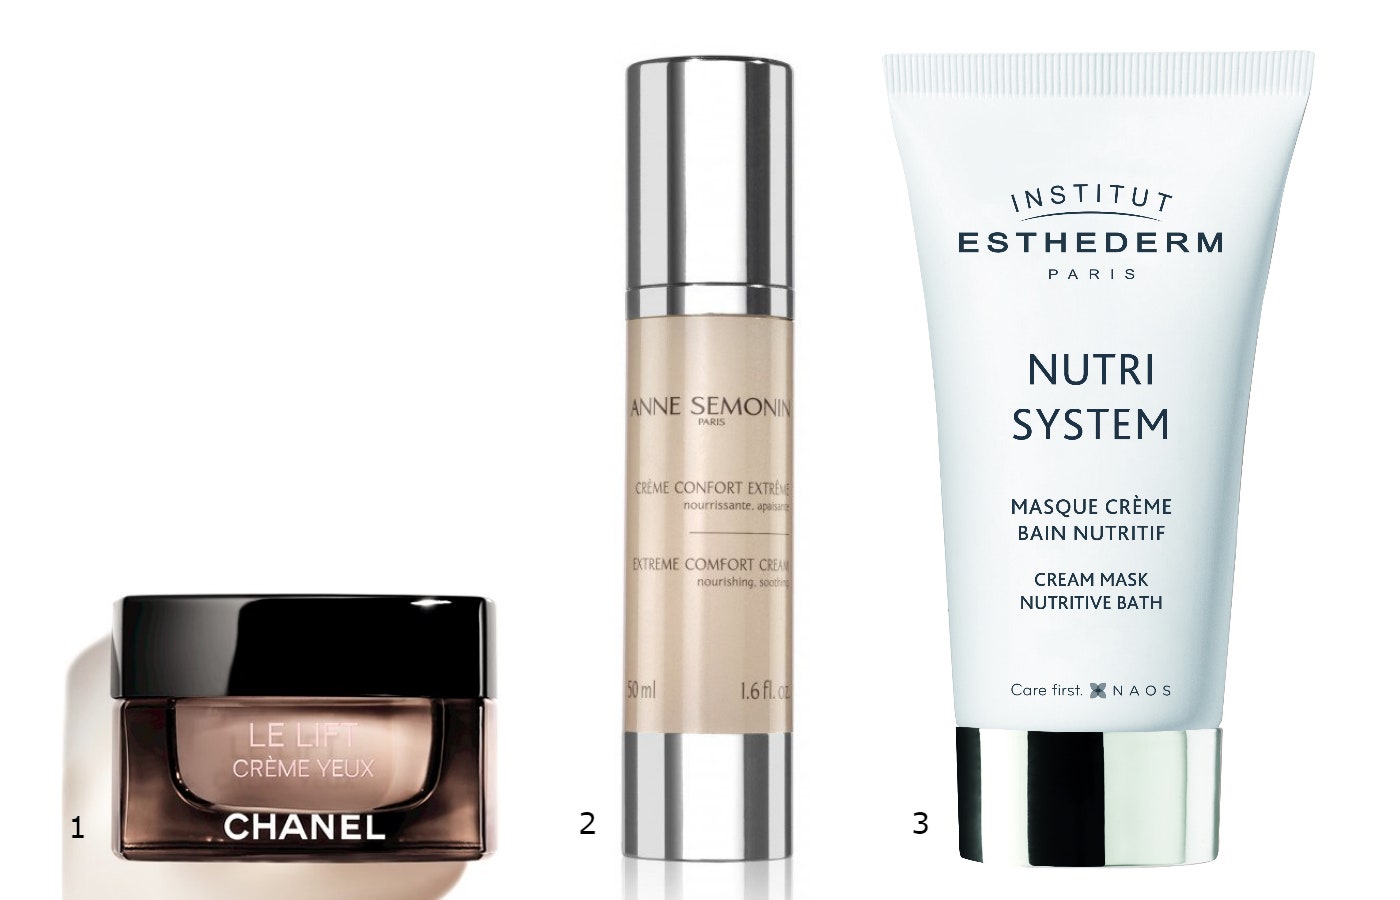 Chanel Le Lift Yeux 2. Anne Semonin Extreme Comfort Cream 3. Institut Esthederm Nutri System Cream Mask Nutritive Bath